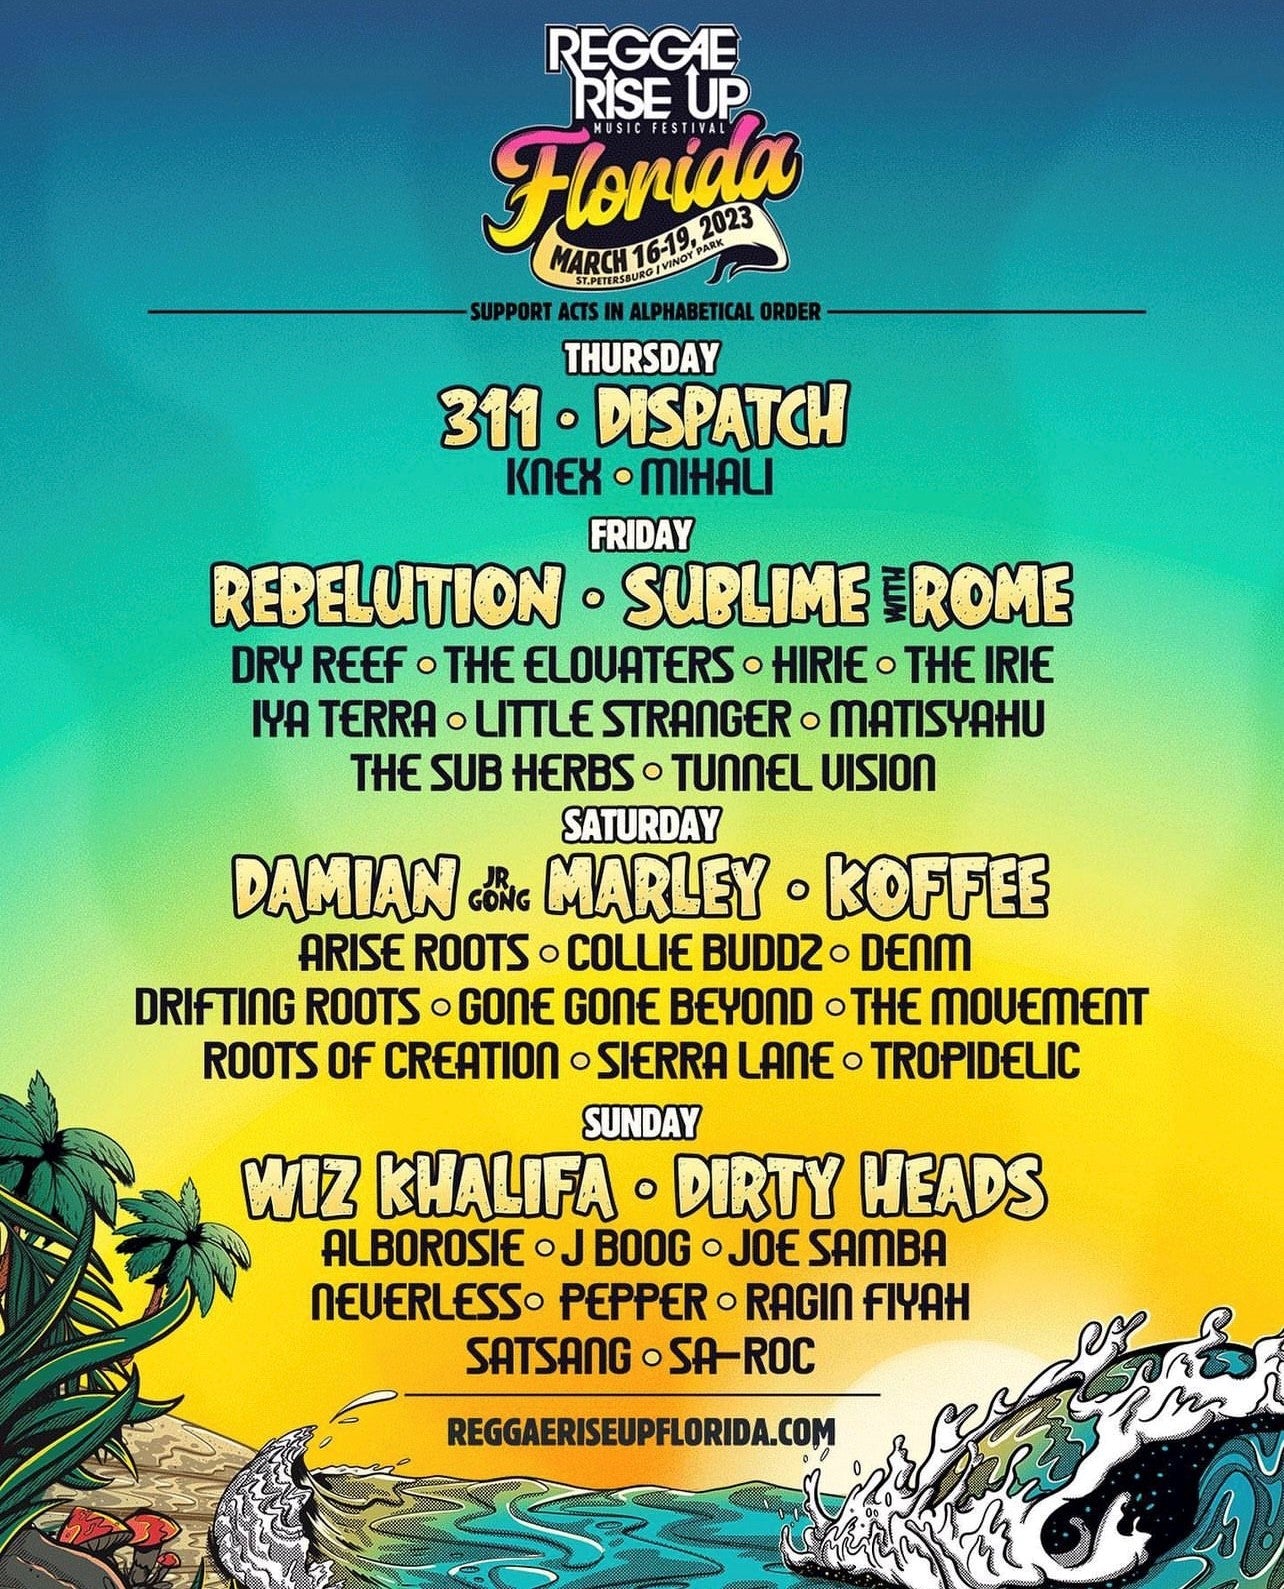 Reggae Rise Up Florida March 16-19, 2023